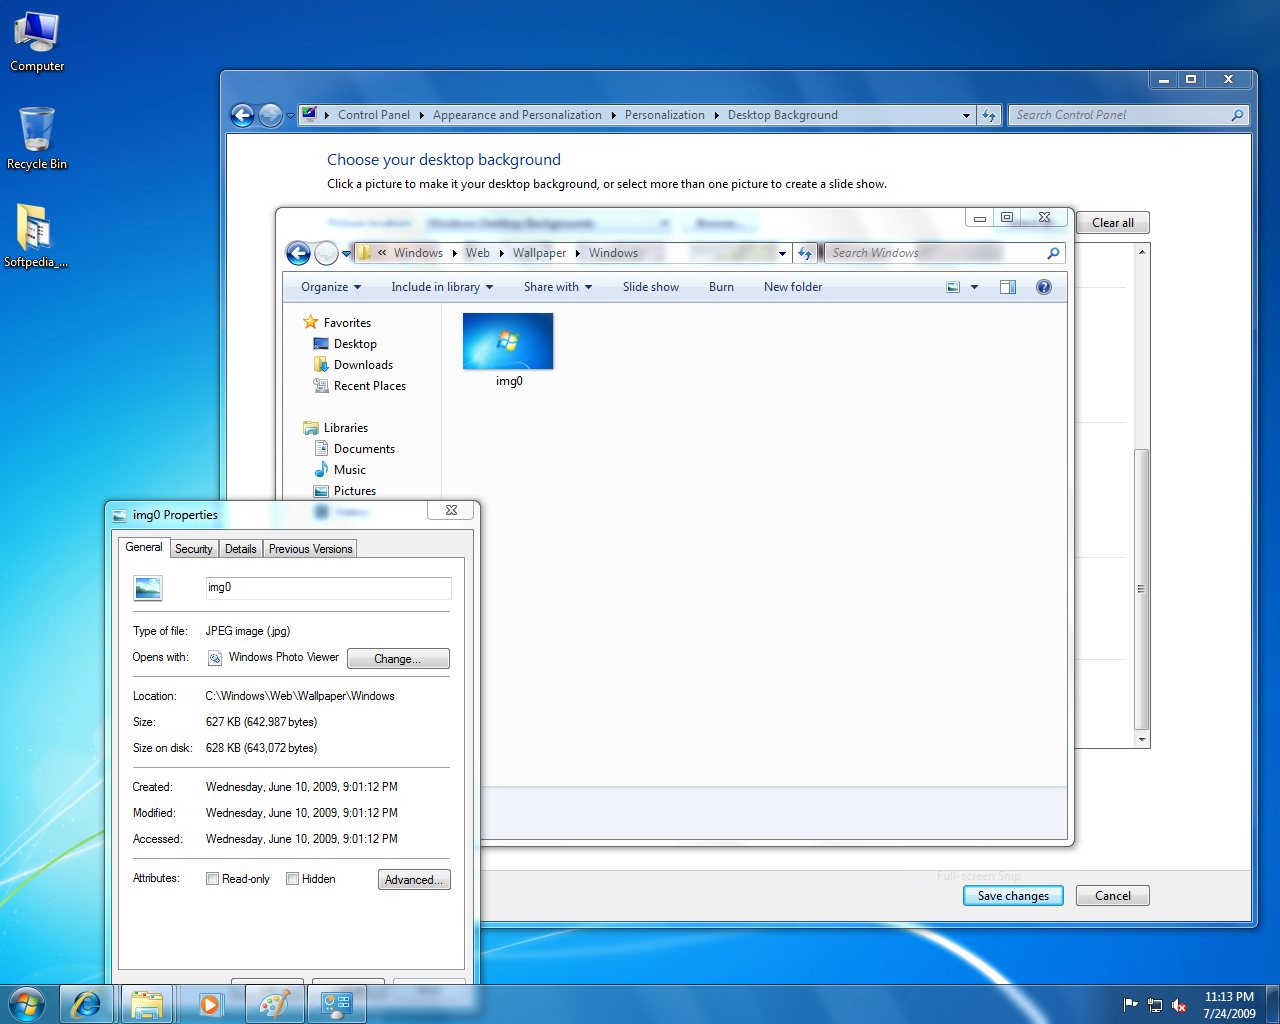 Windows 7 Ultimate Serial Key 32 Bit Free Download